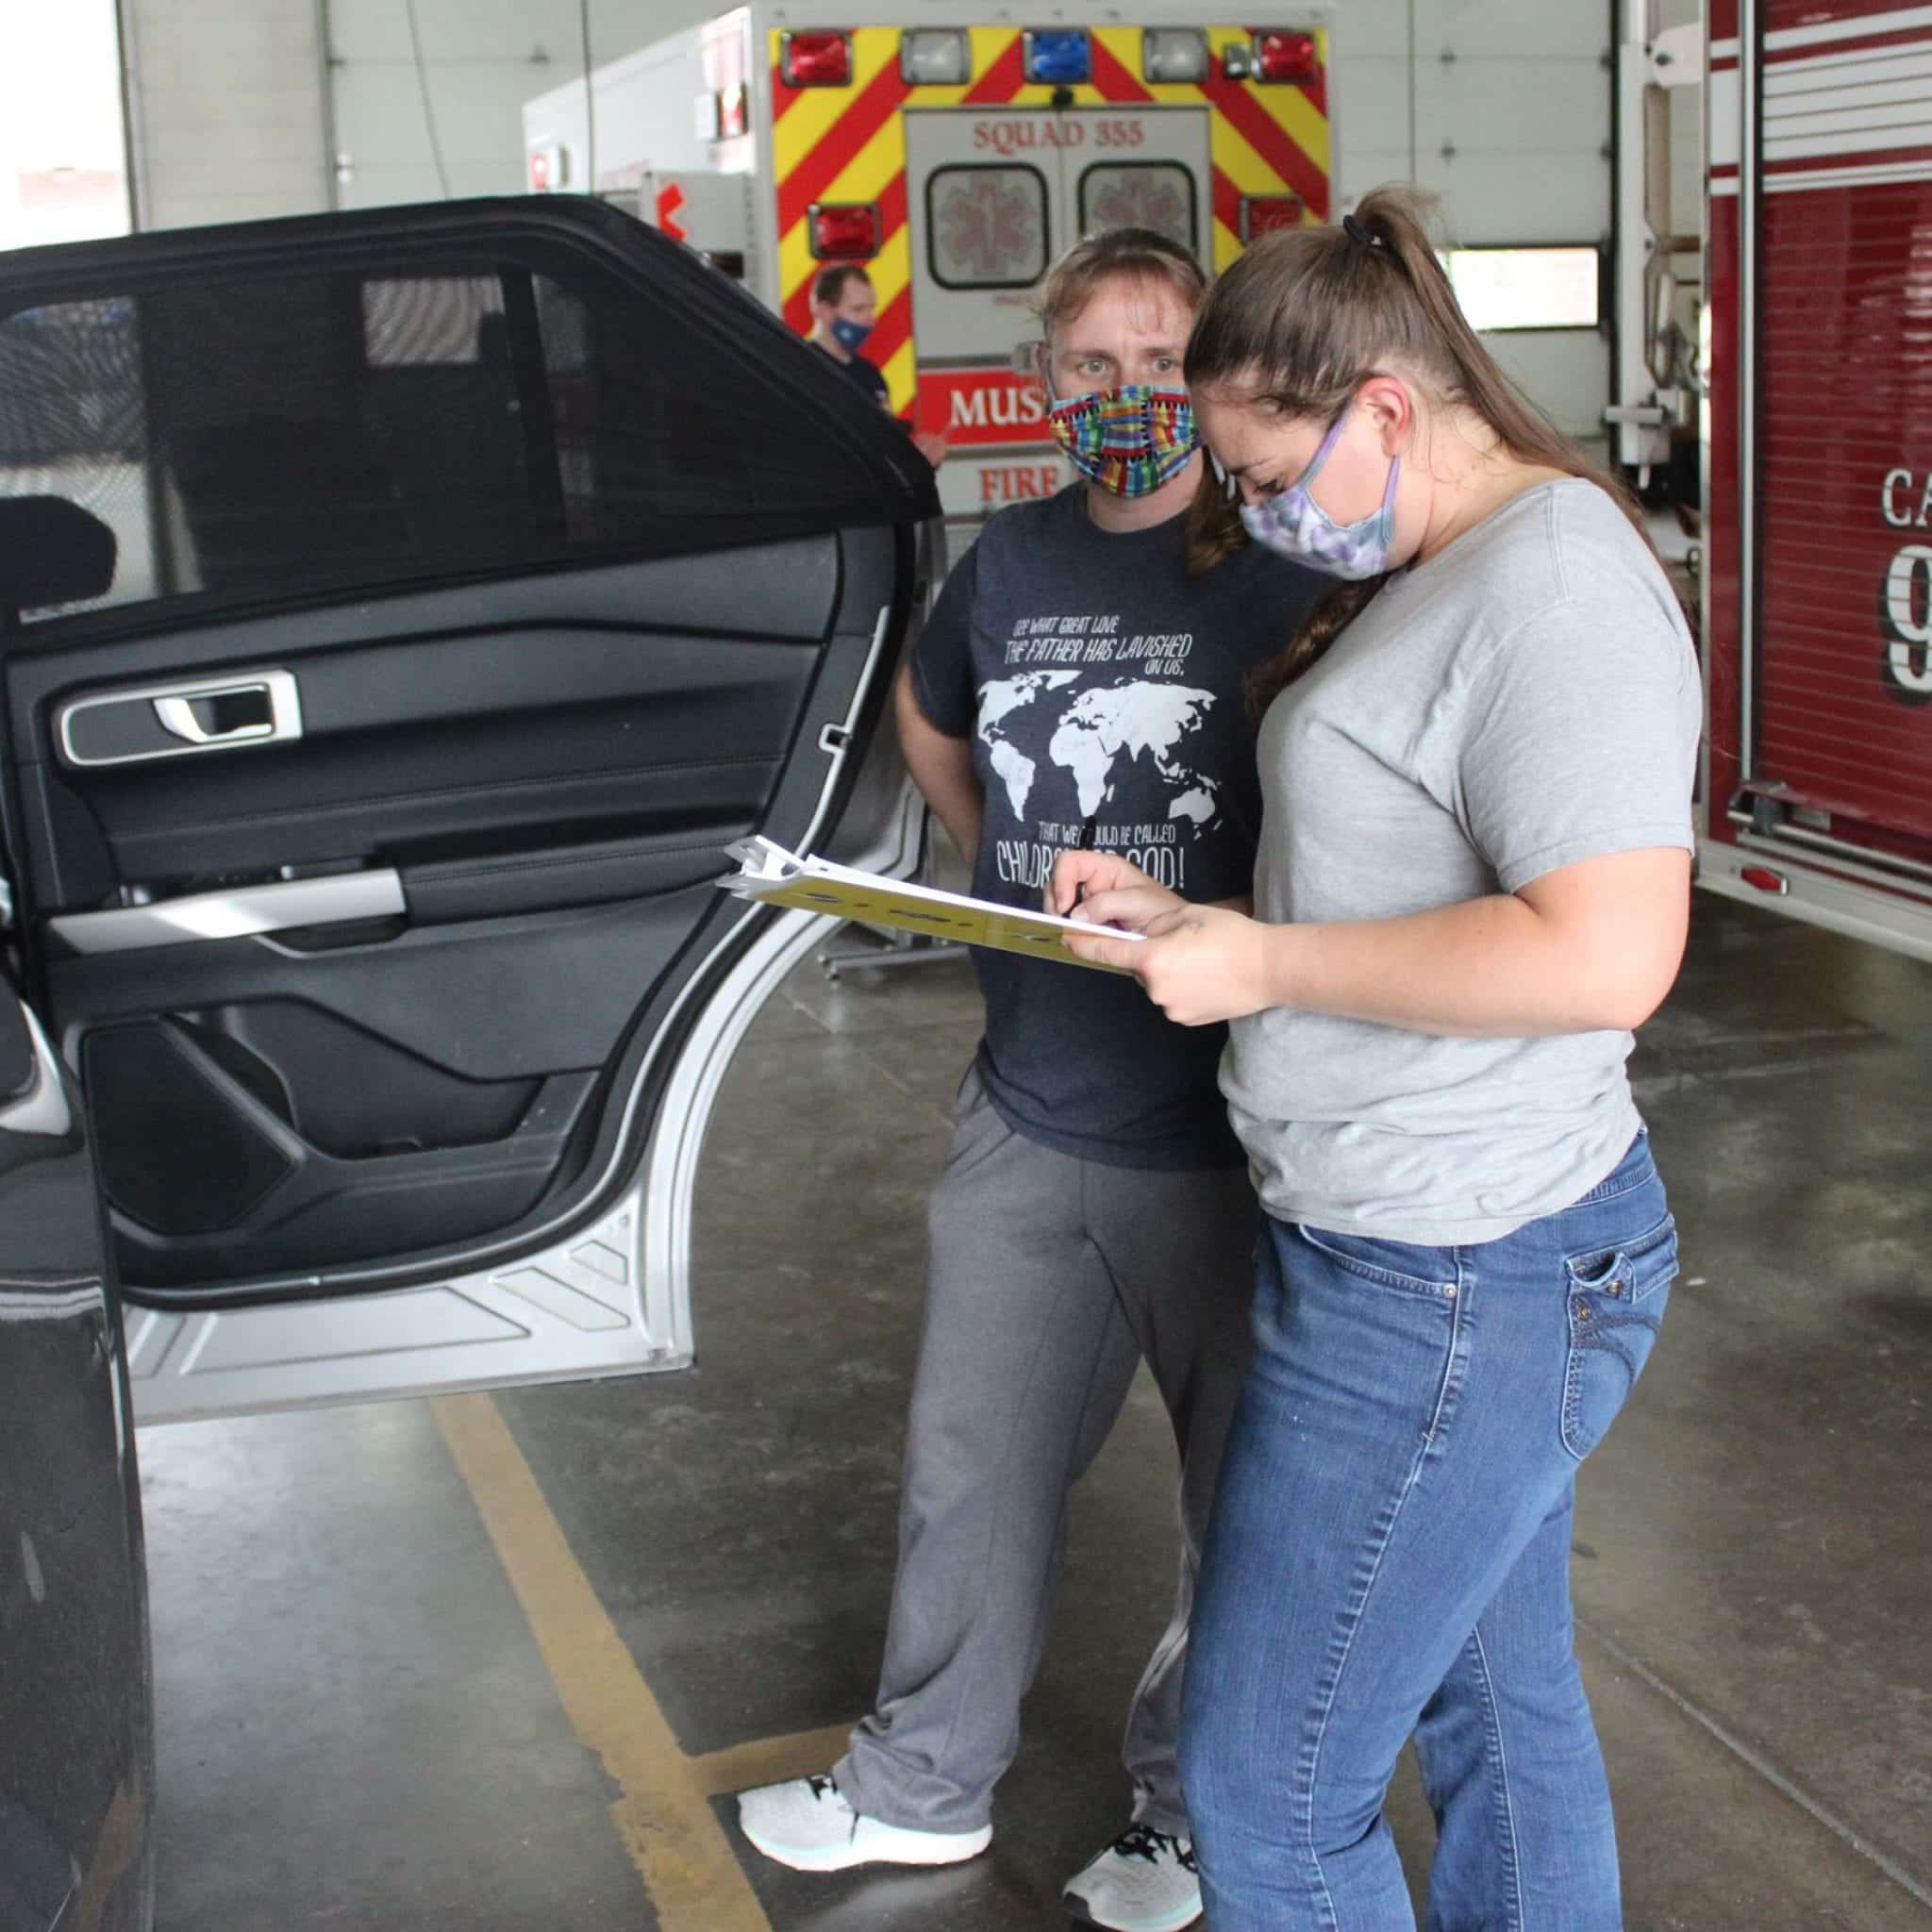 Fire Department has car seat technicians available